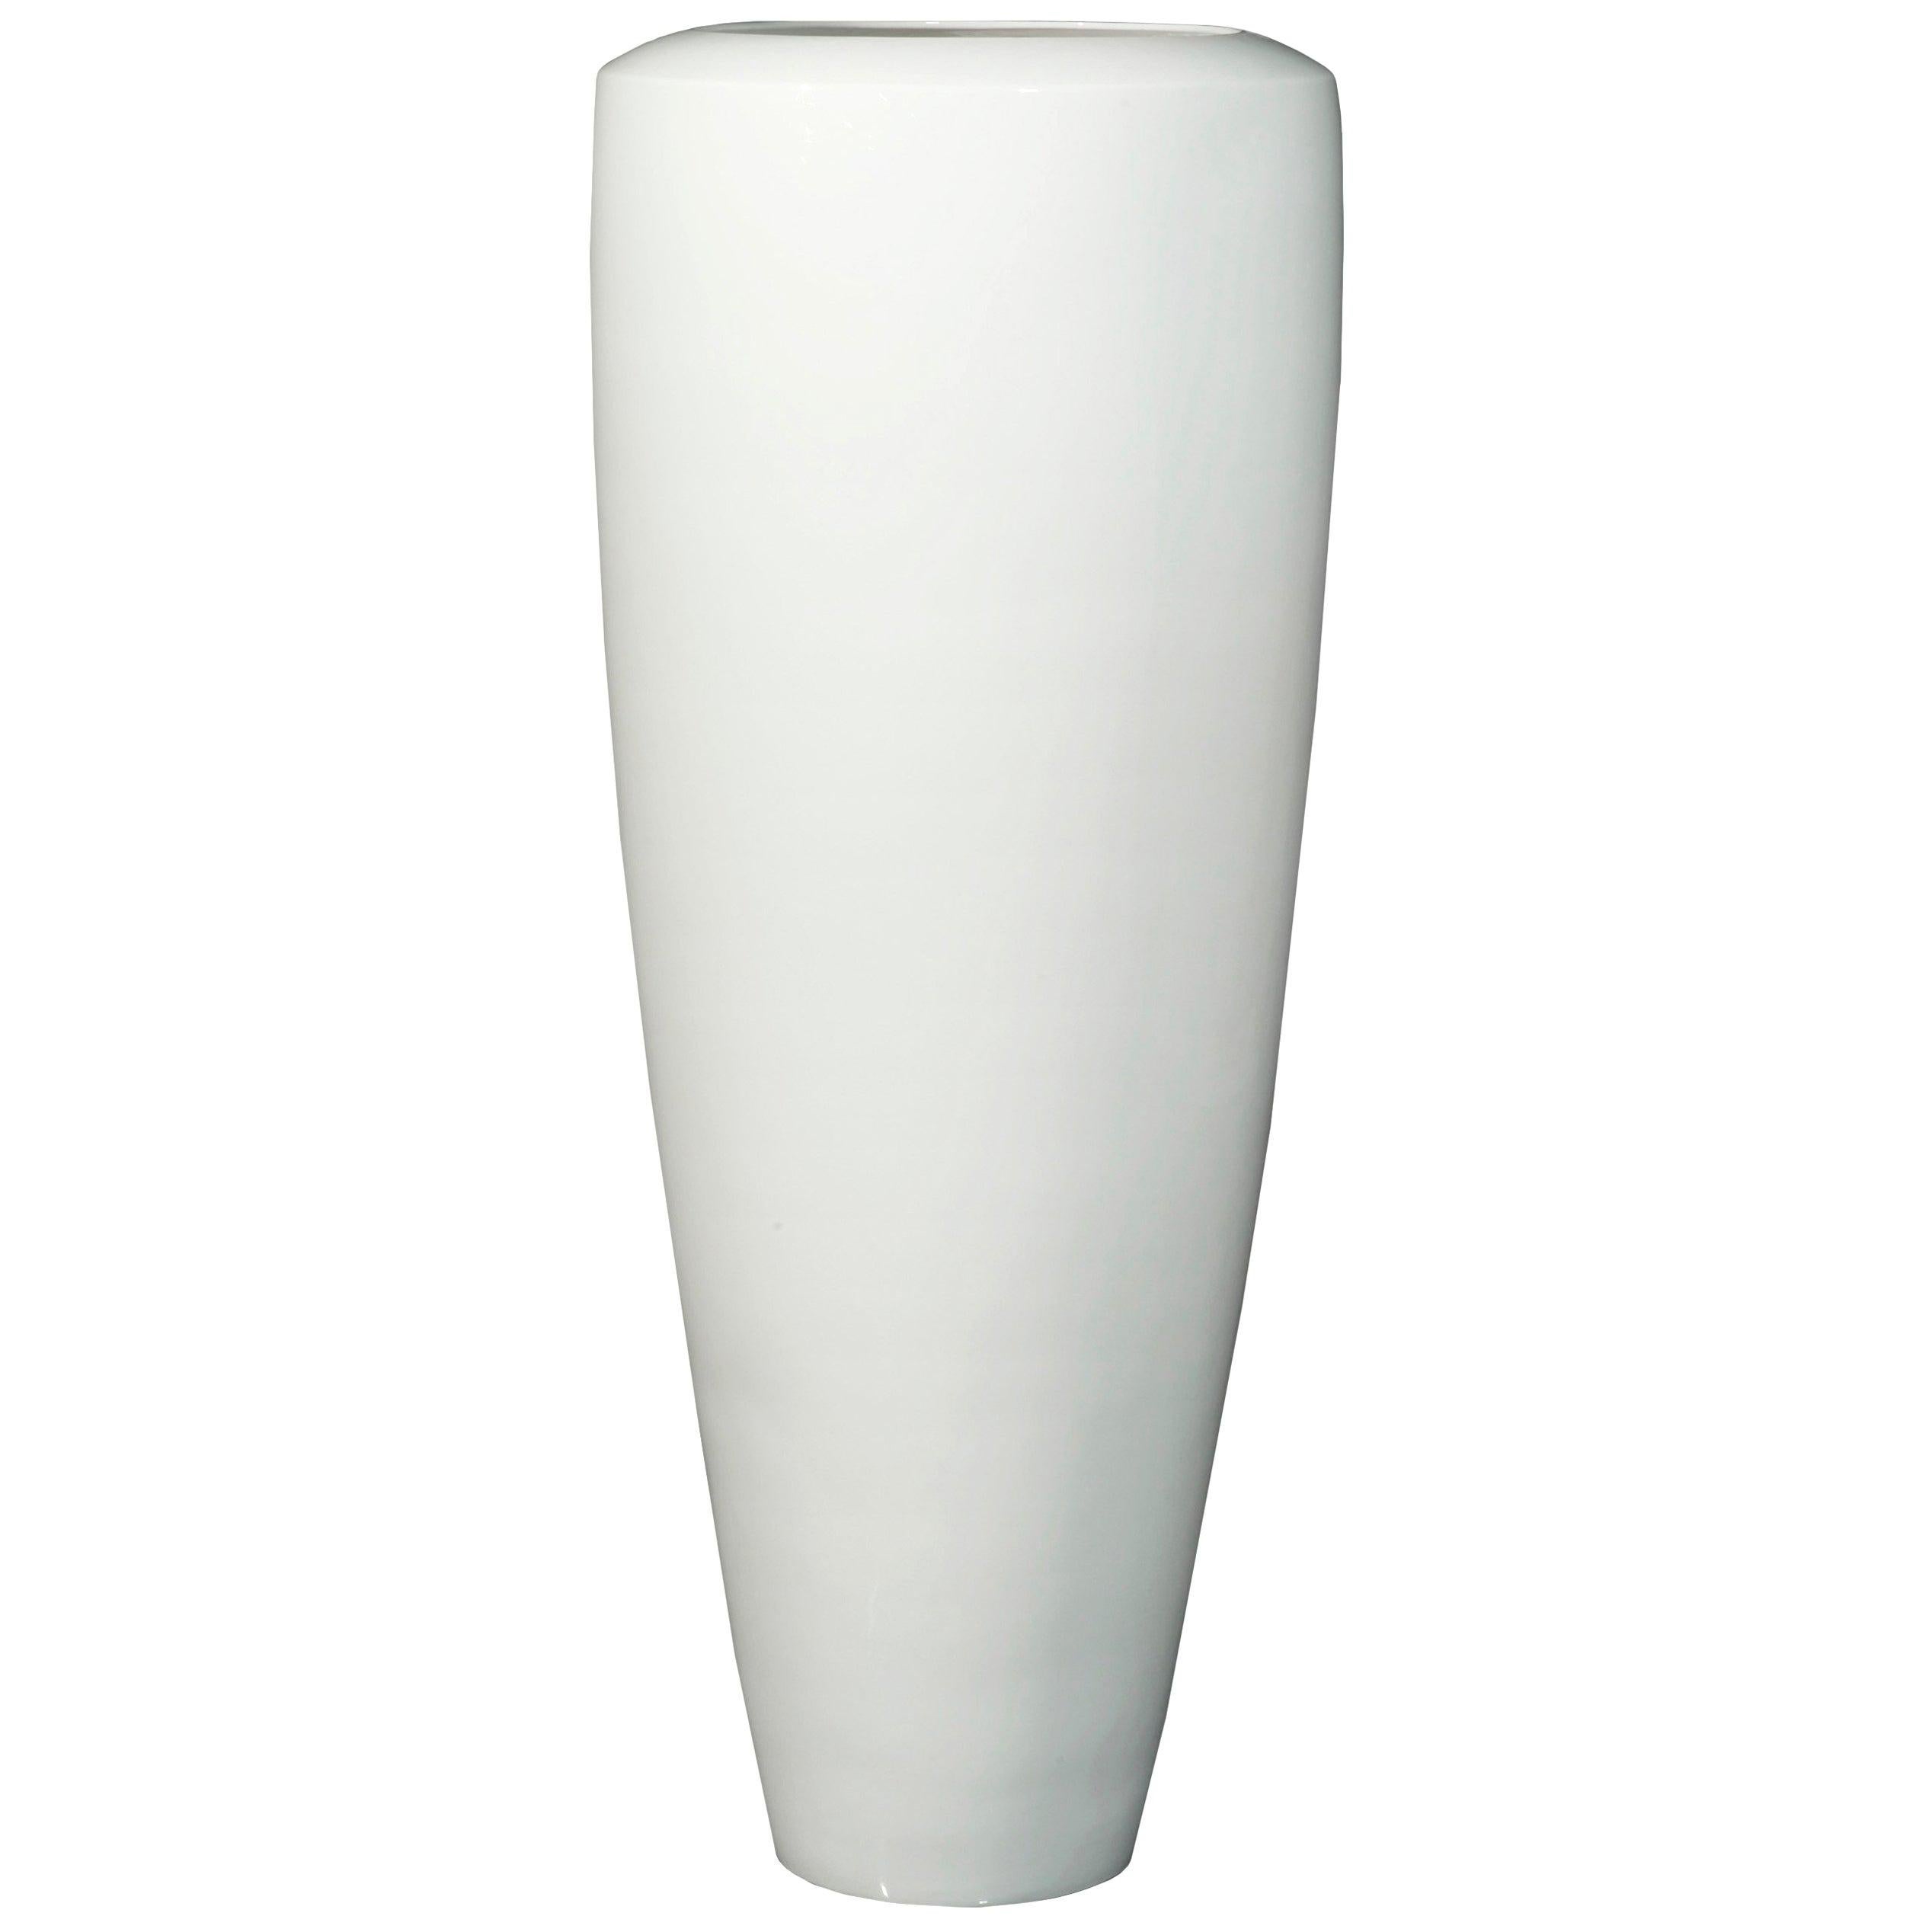 Vase Obice Medium in Ceramic, Shiny White, Italy